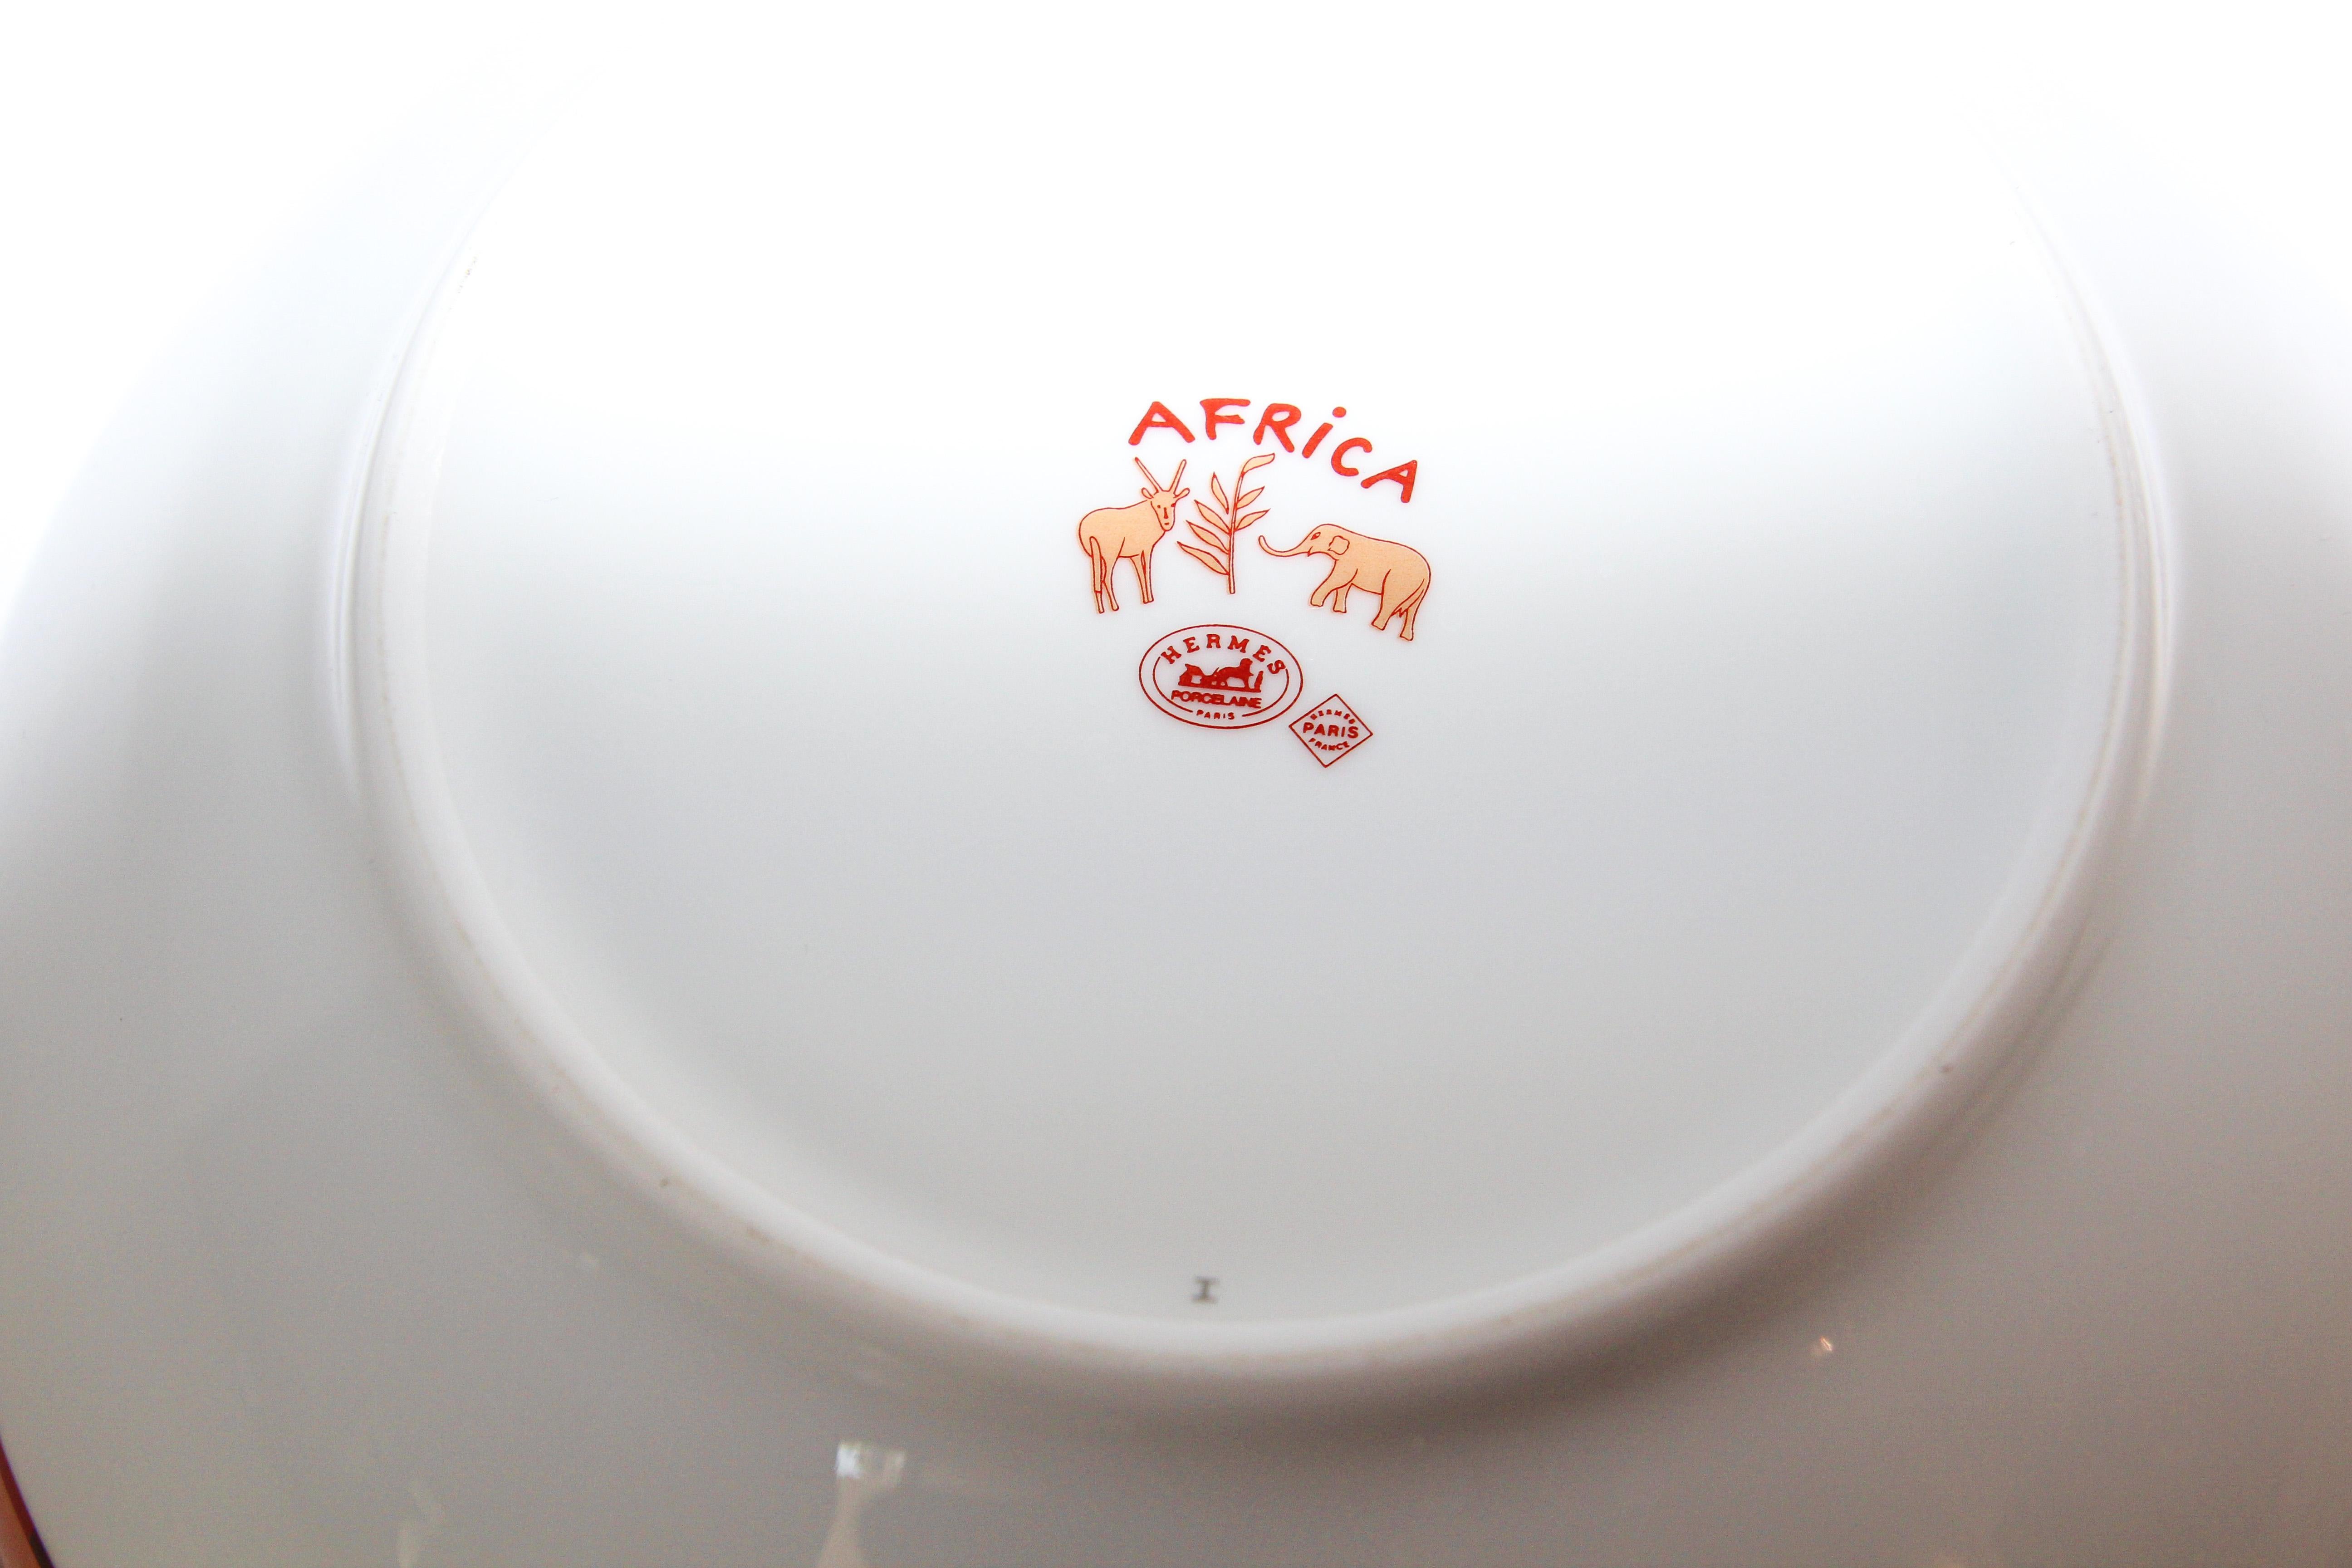 Hermès Africa Orange Large Porcelain Salad Bowl with Safari Design 8